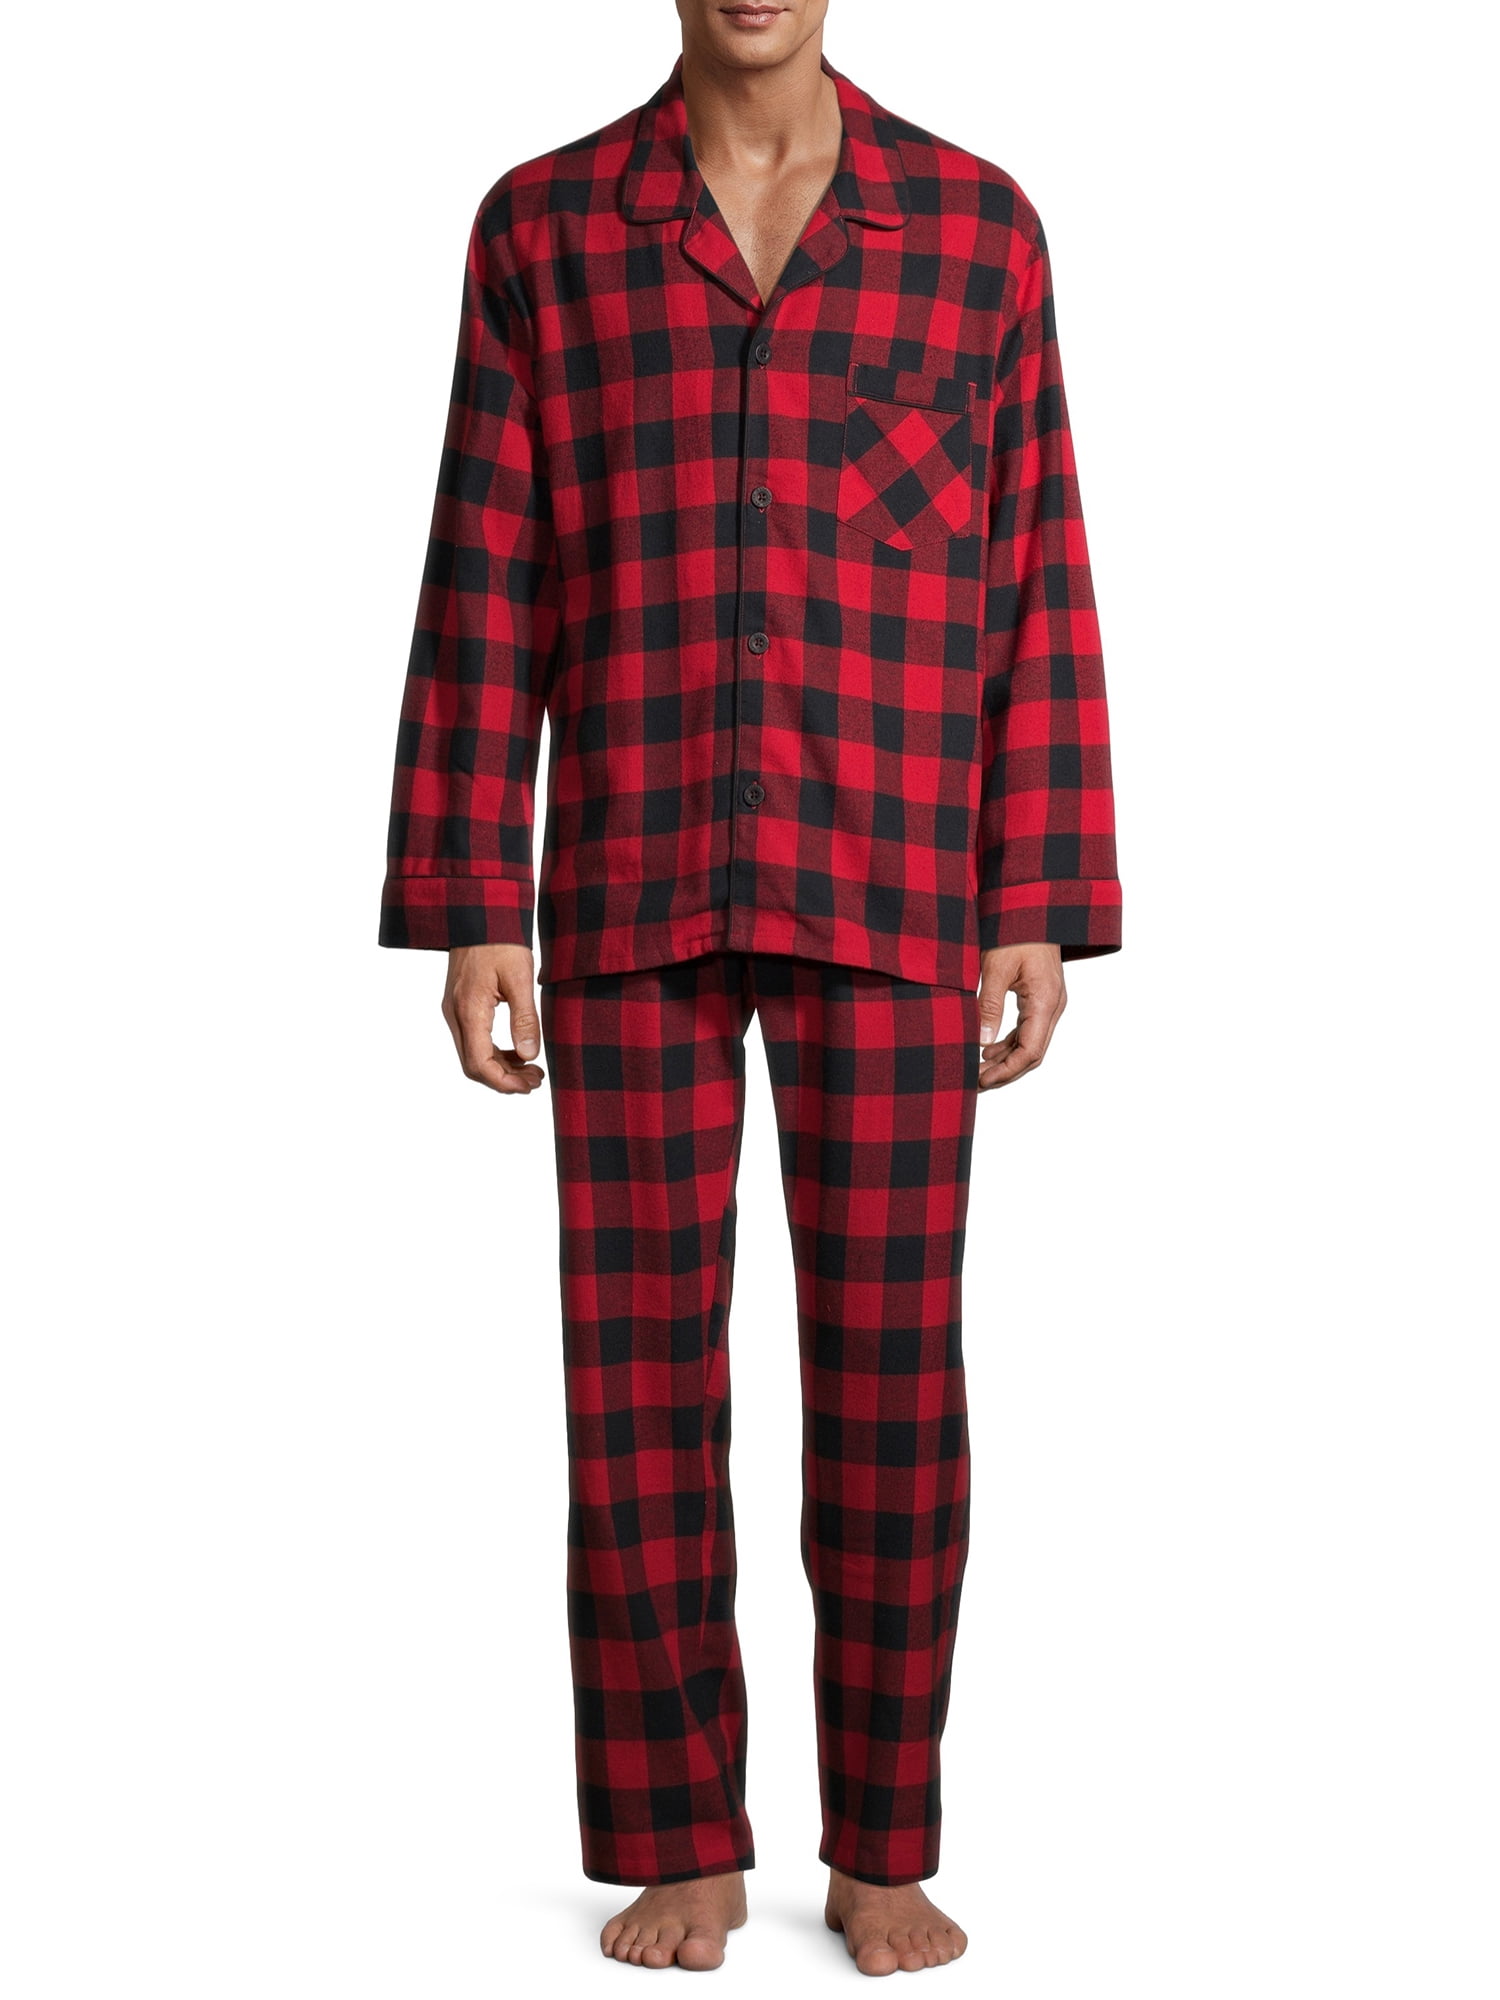 AnyBody Sleep Sleep Tall Brushed Jersey Printed 2-Piece Pajama Set